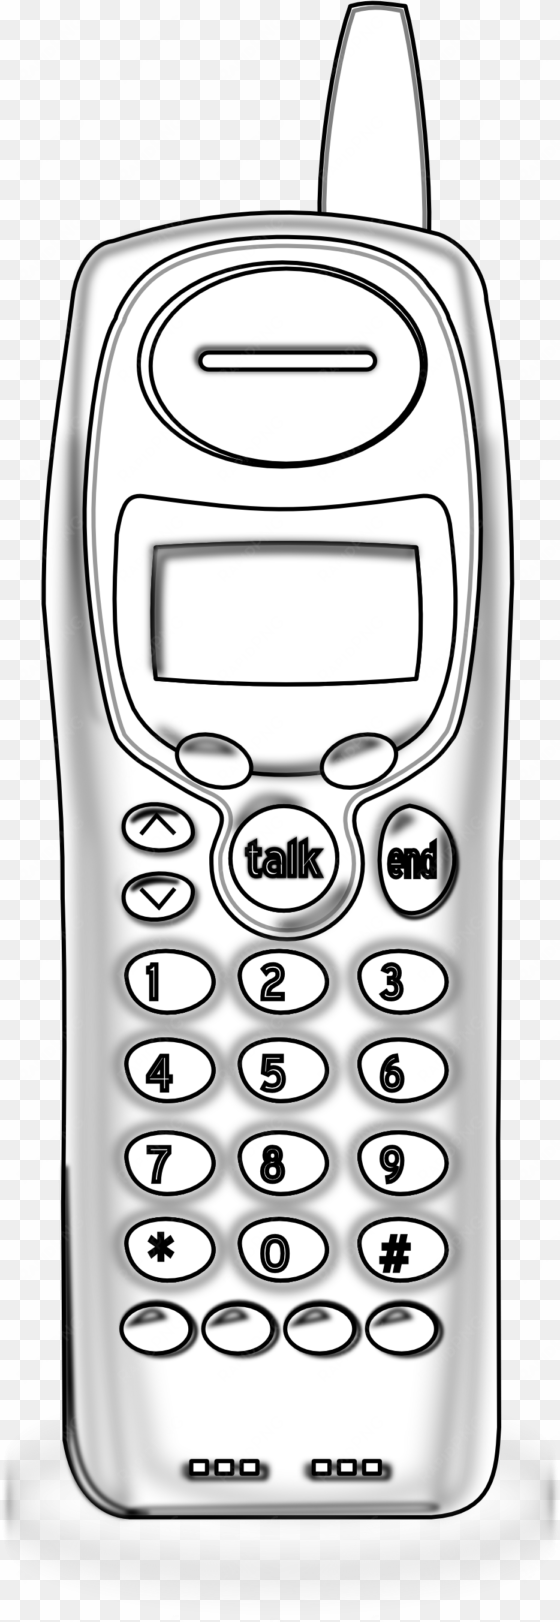 clipartist net clip art no basestation coloring - cordless phones black white